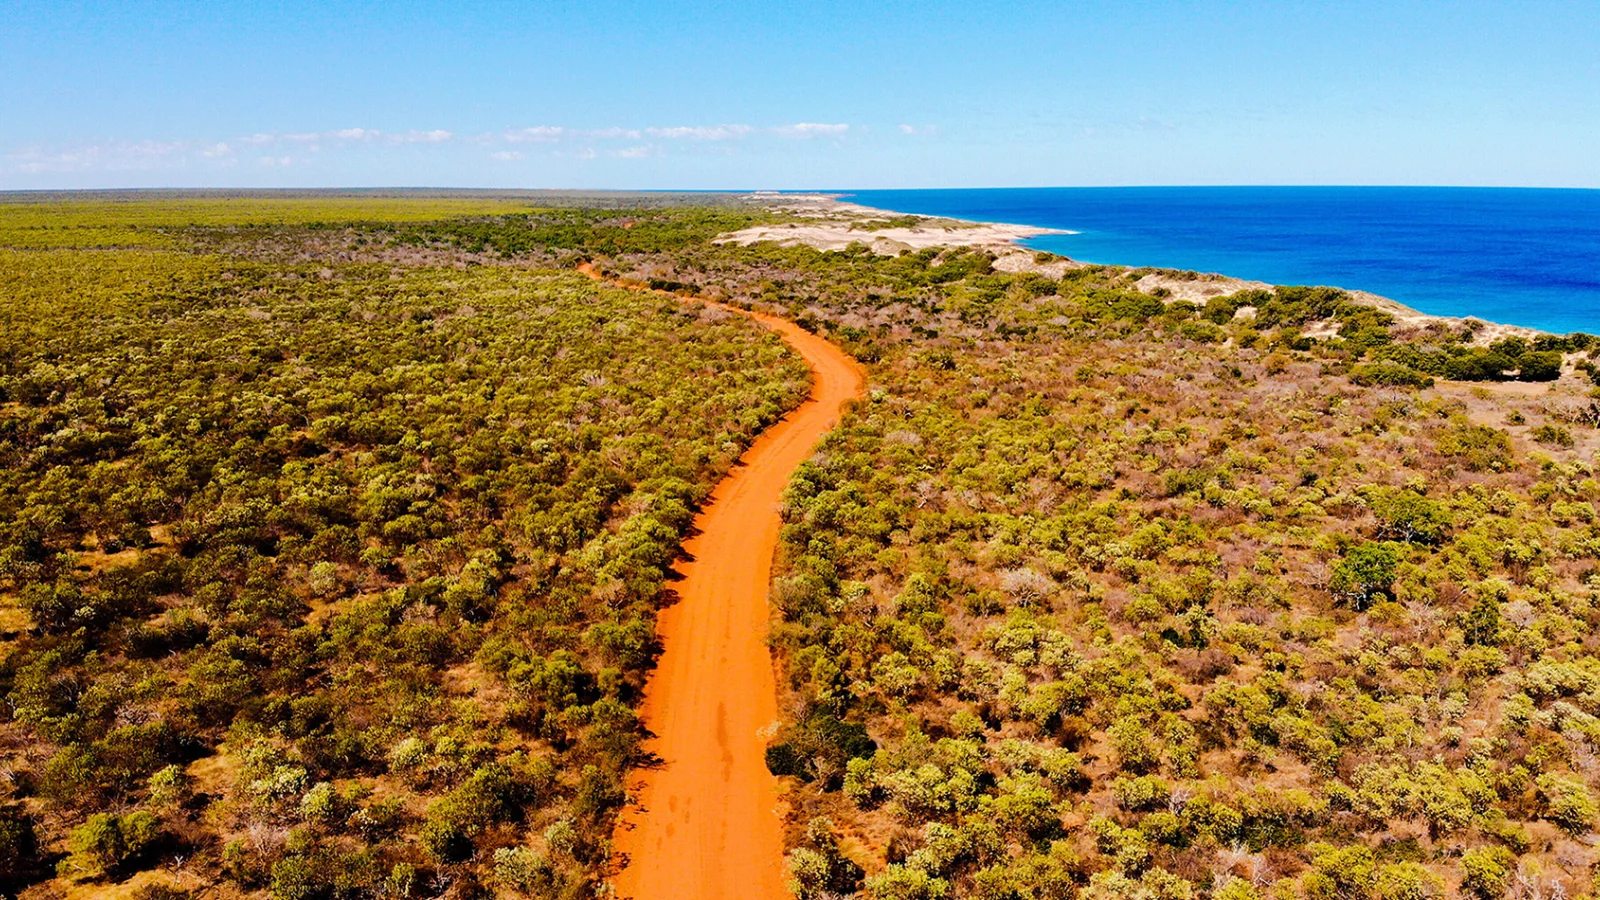 Australien-West Australia-Kimberley Region-James Price Point-outback-dirt roads